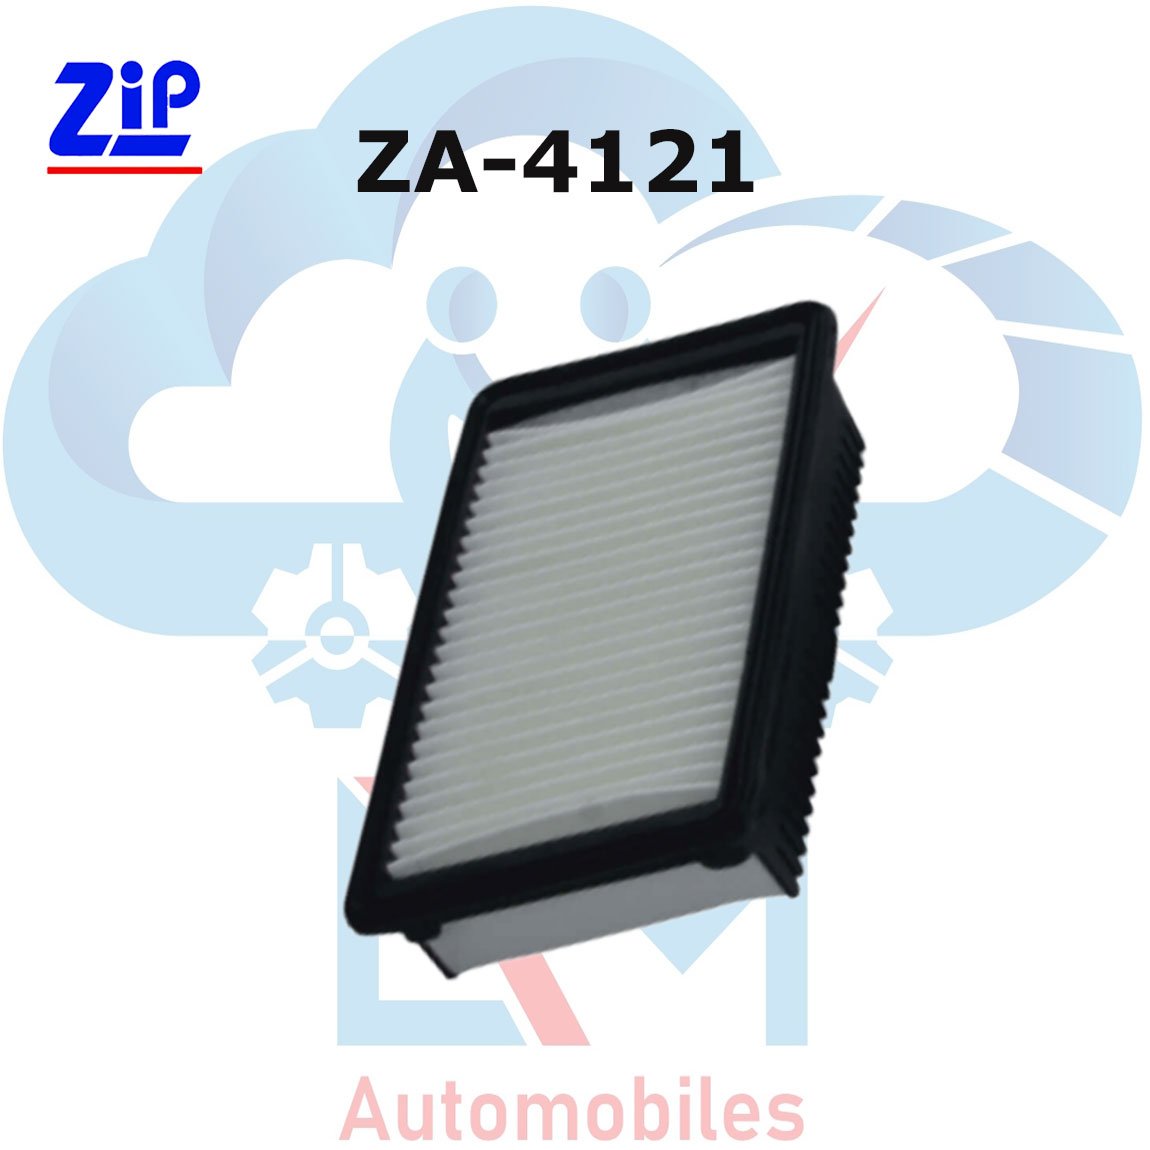 Venue Air filter in zip filter